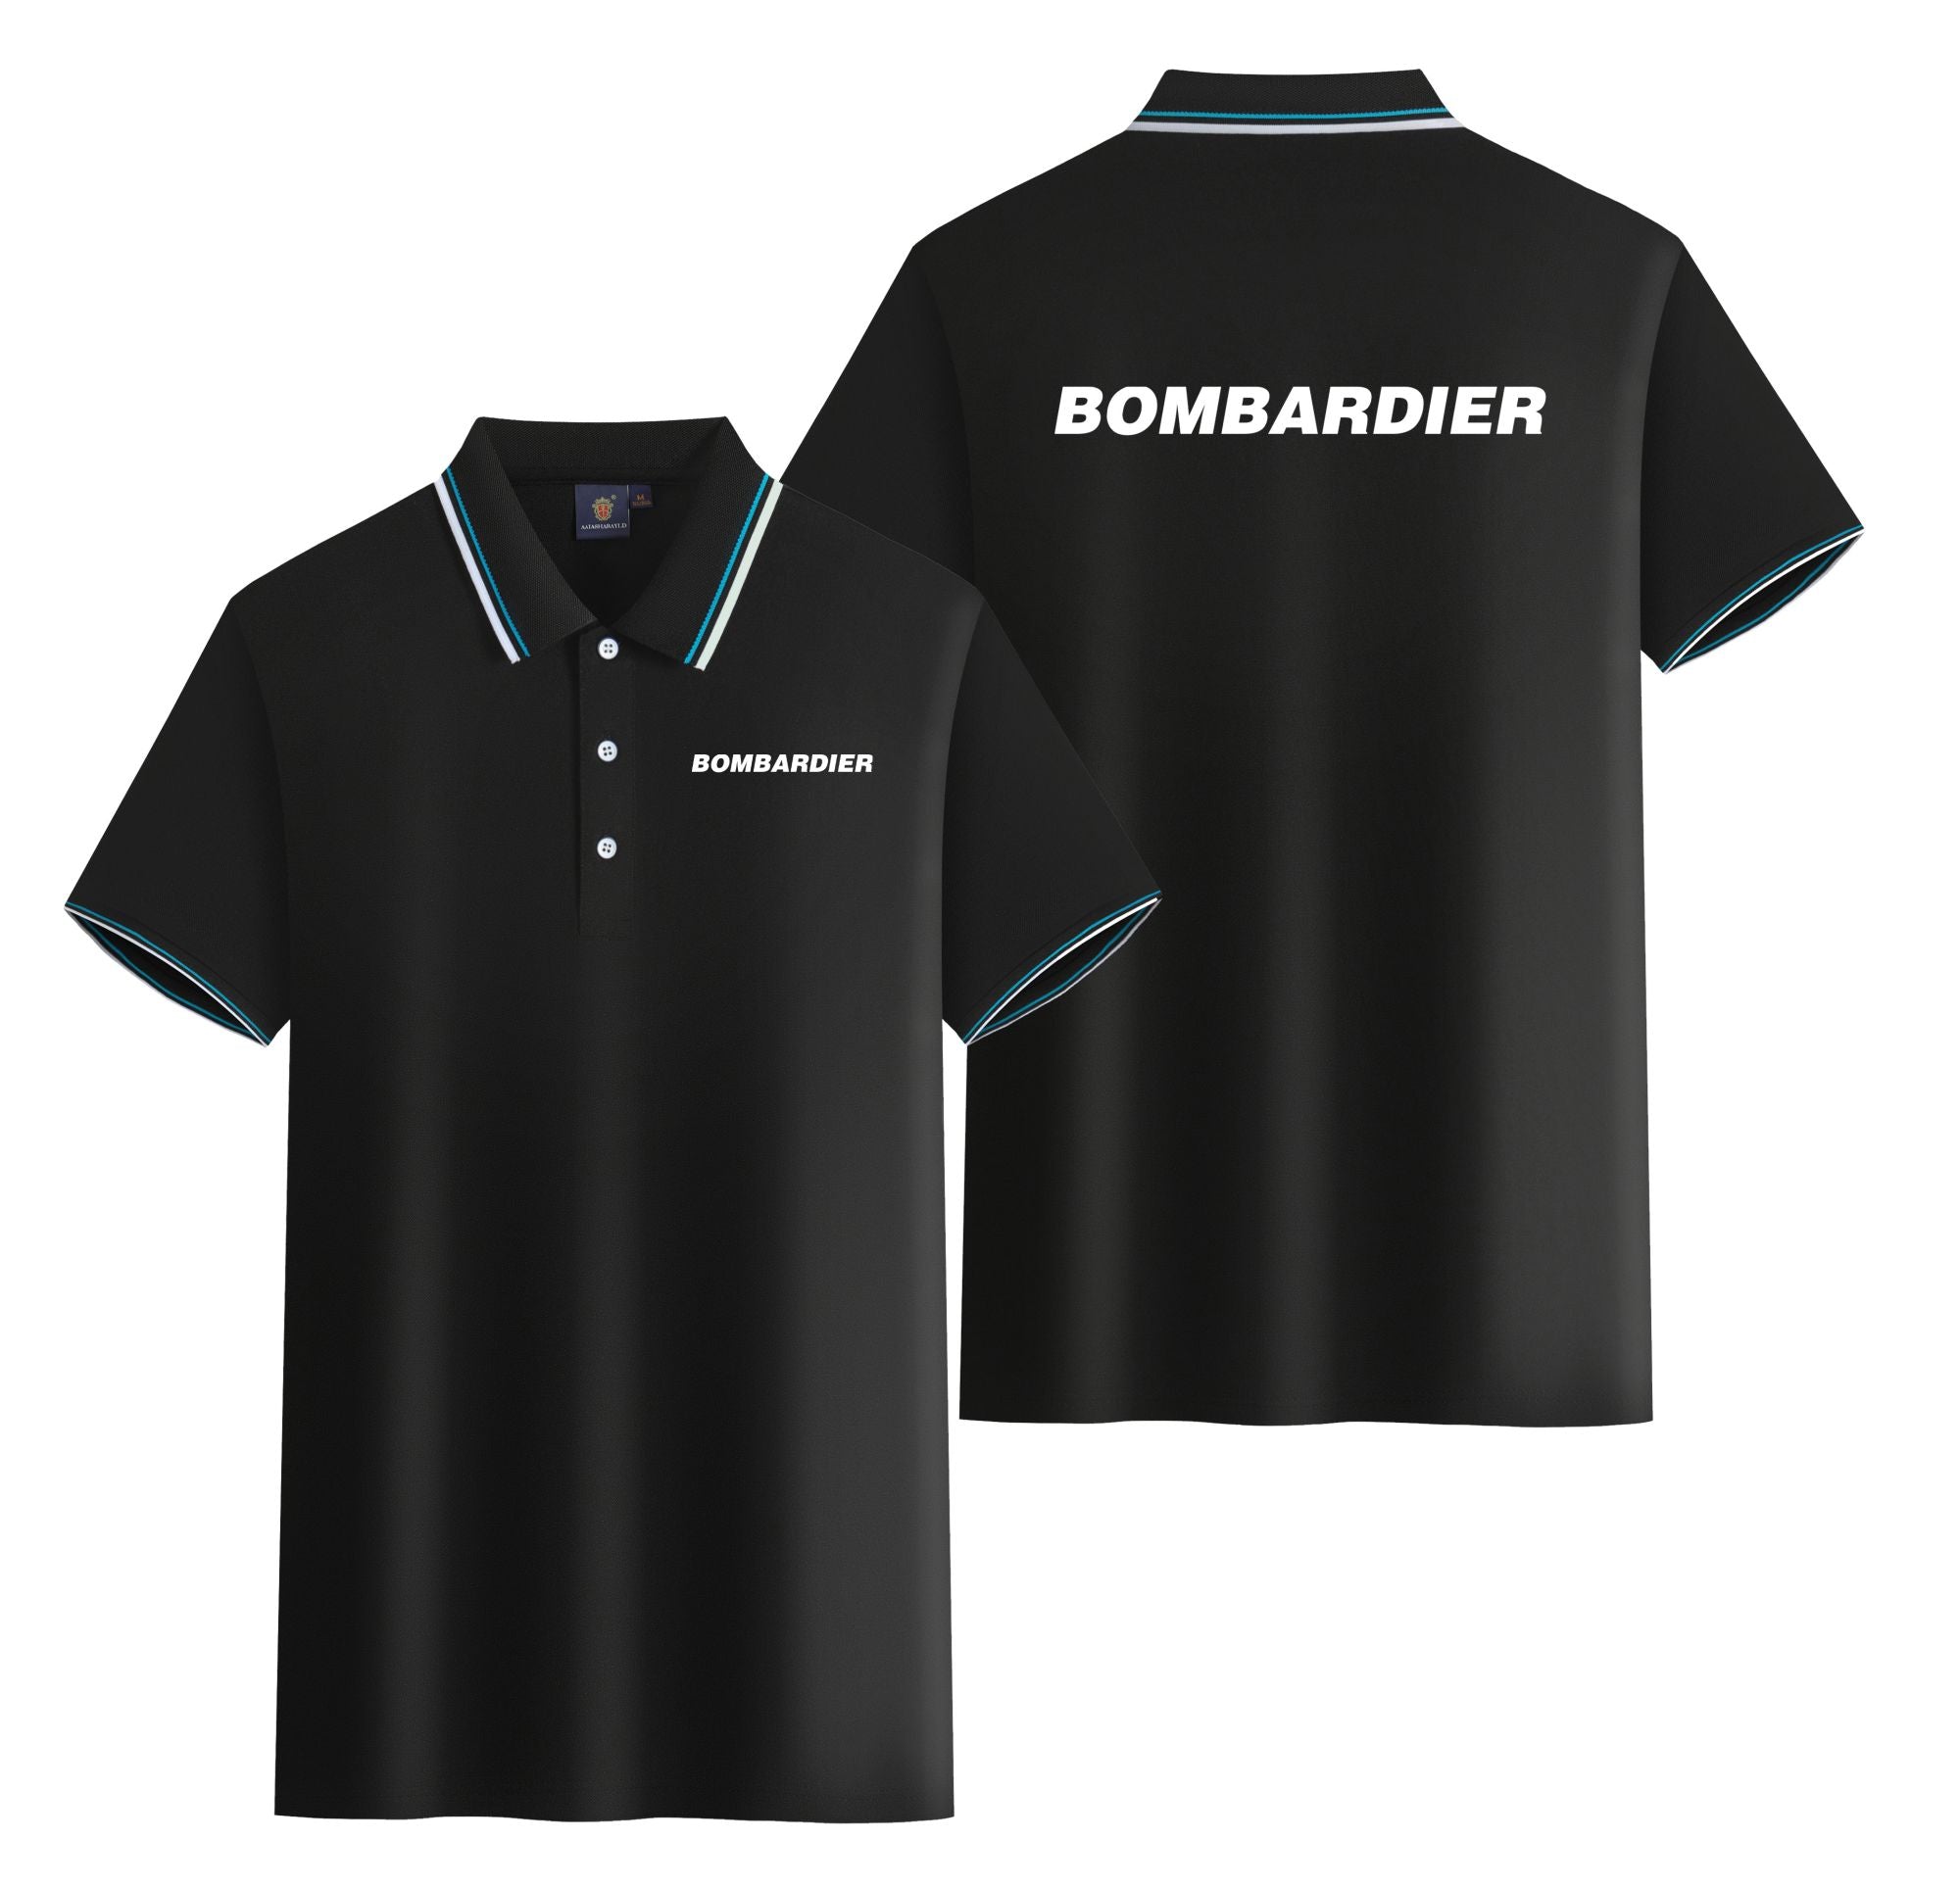 Bombardier & Text Designed Stylish Polo T-Shirts (Double-Side)